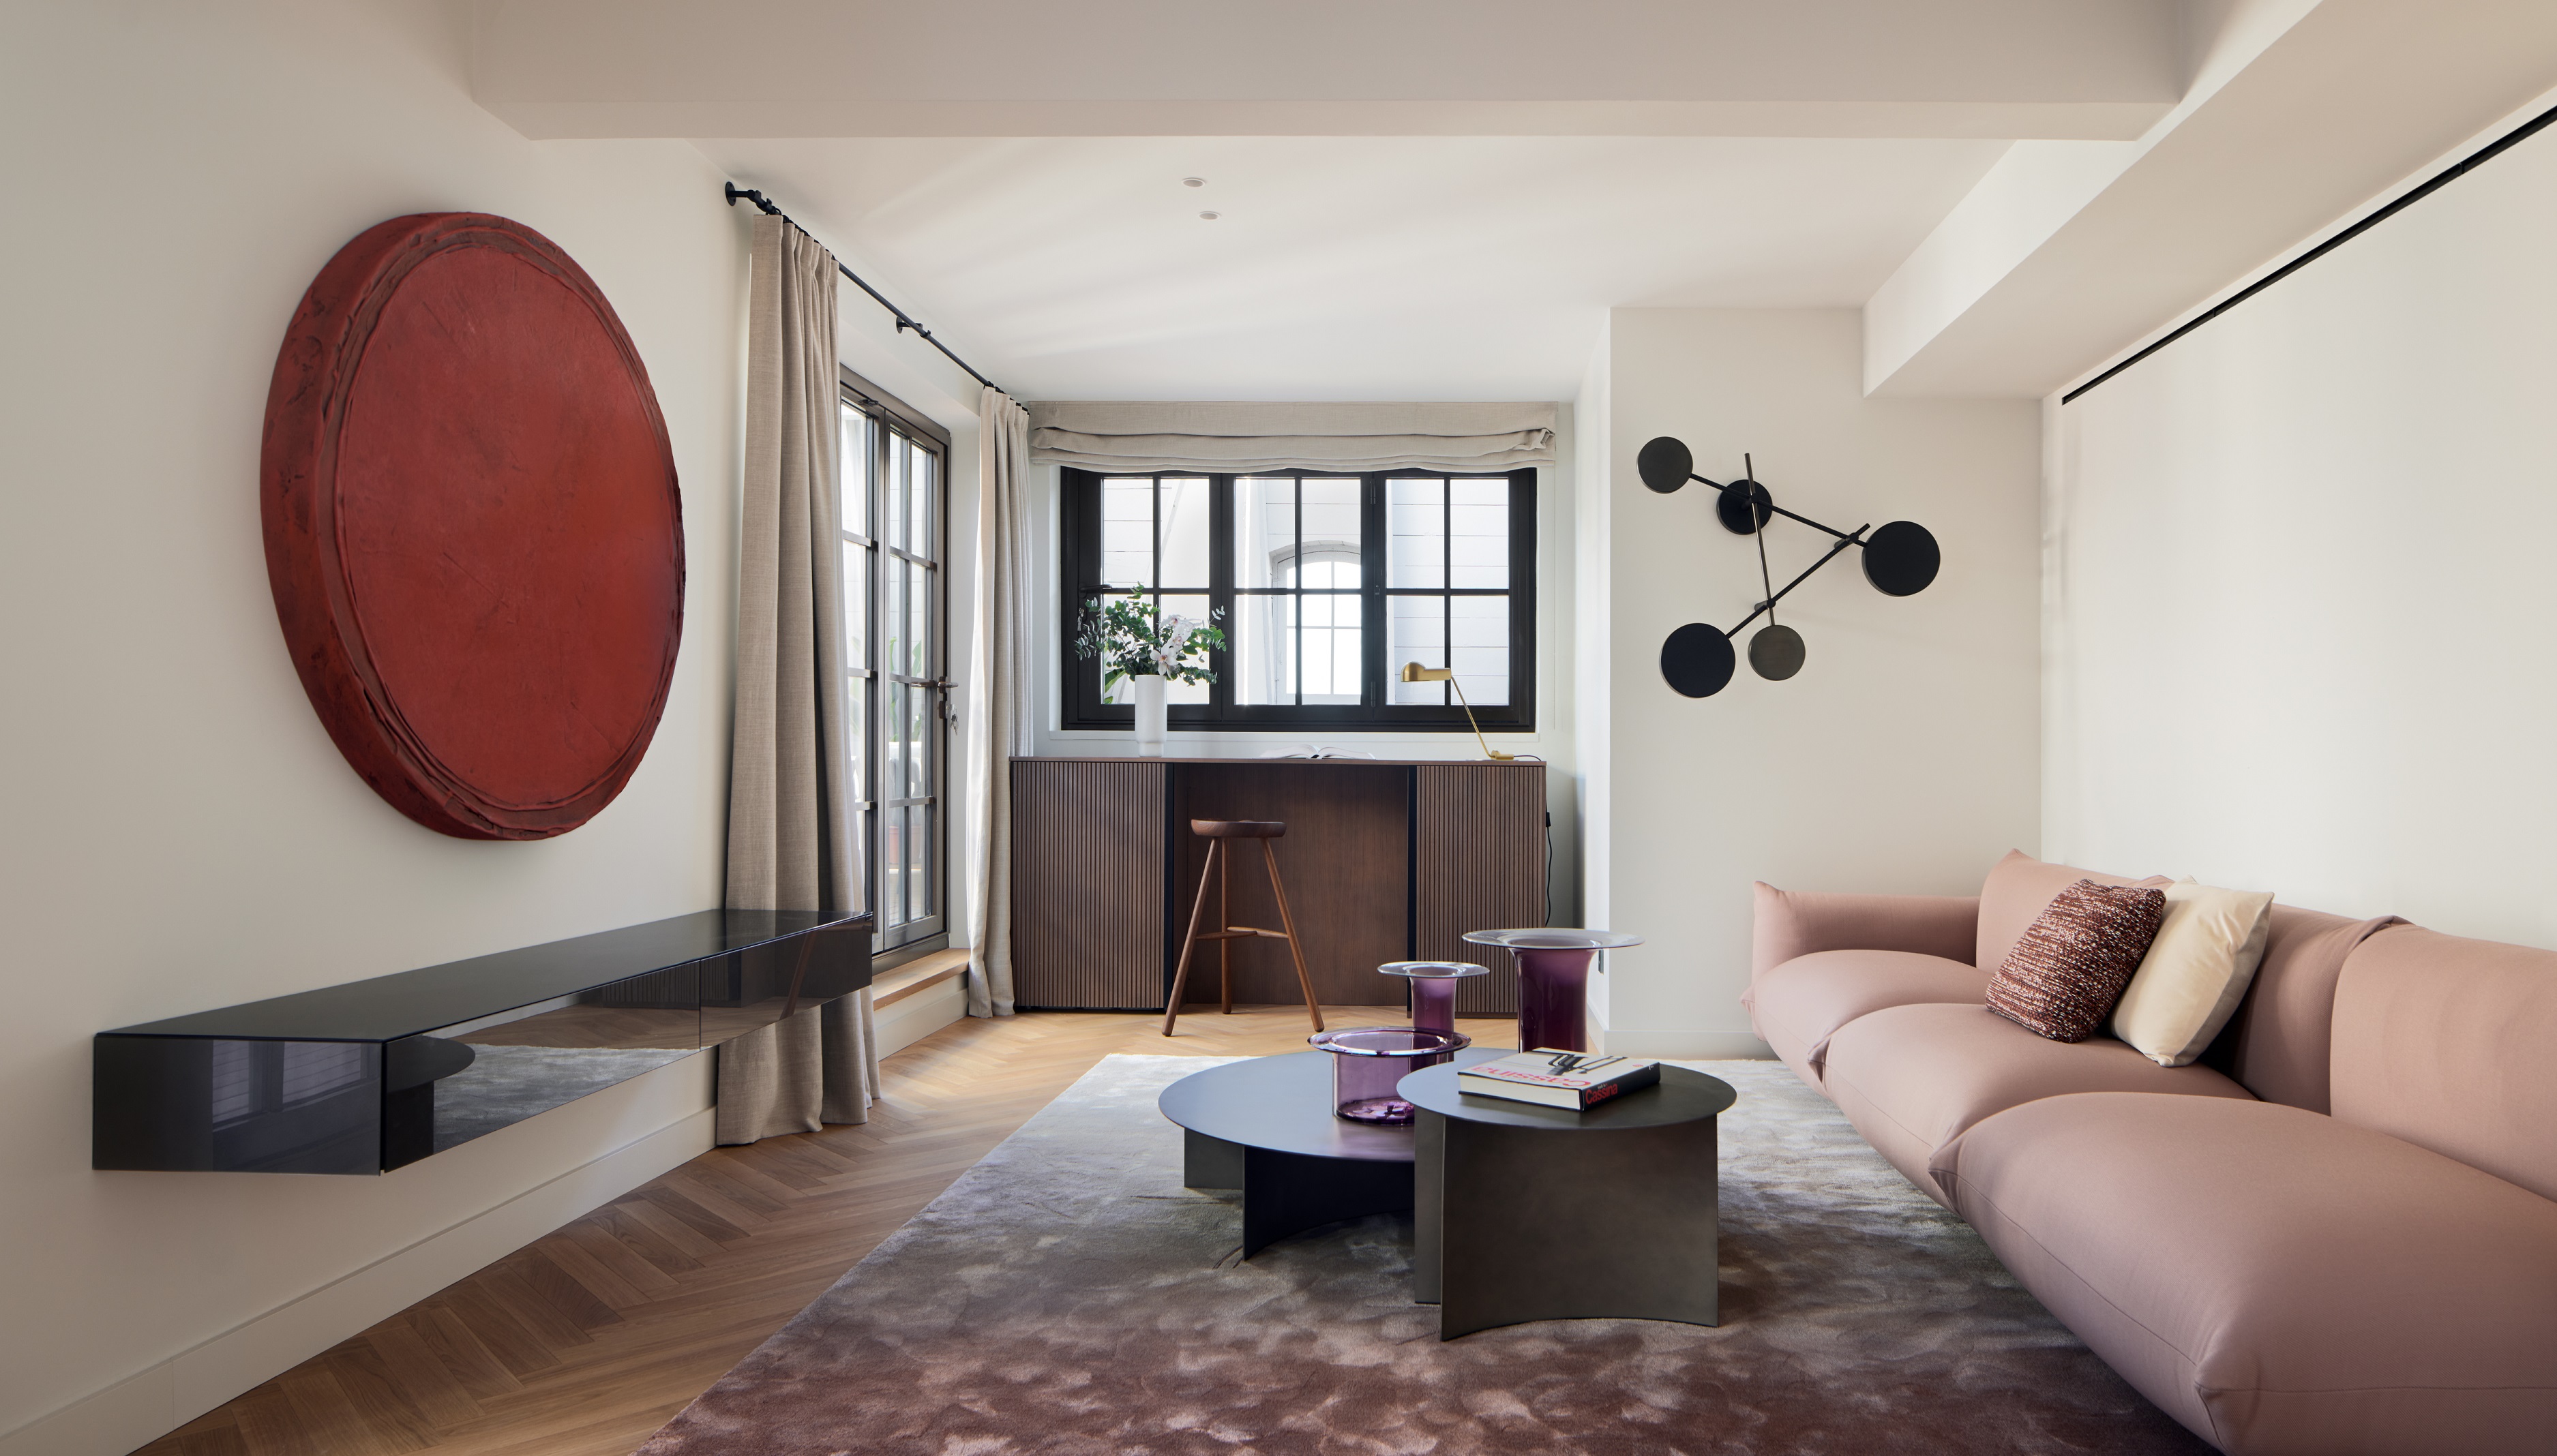 Pedralbes AV. Penthouse LUV Studio Living Room B 1 - LUV Studio - Arquitectura y diseño - Barcelona